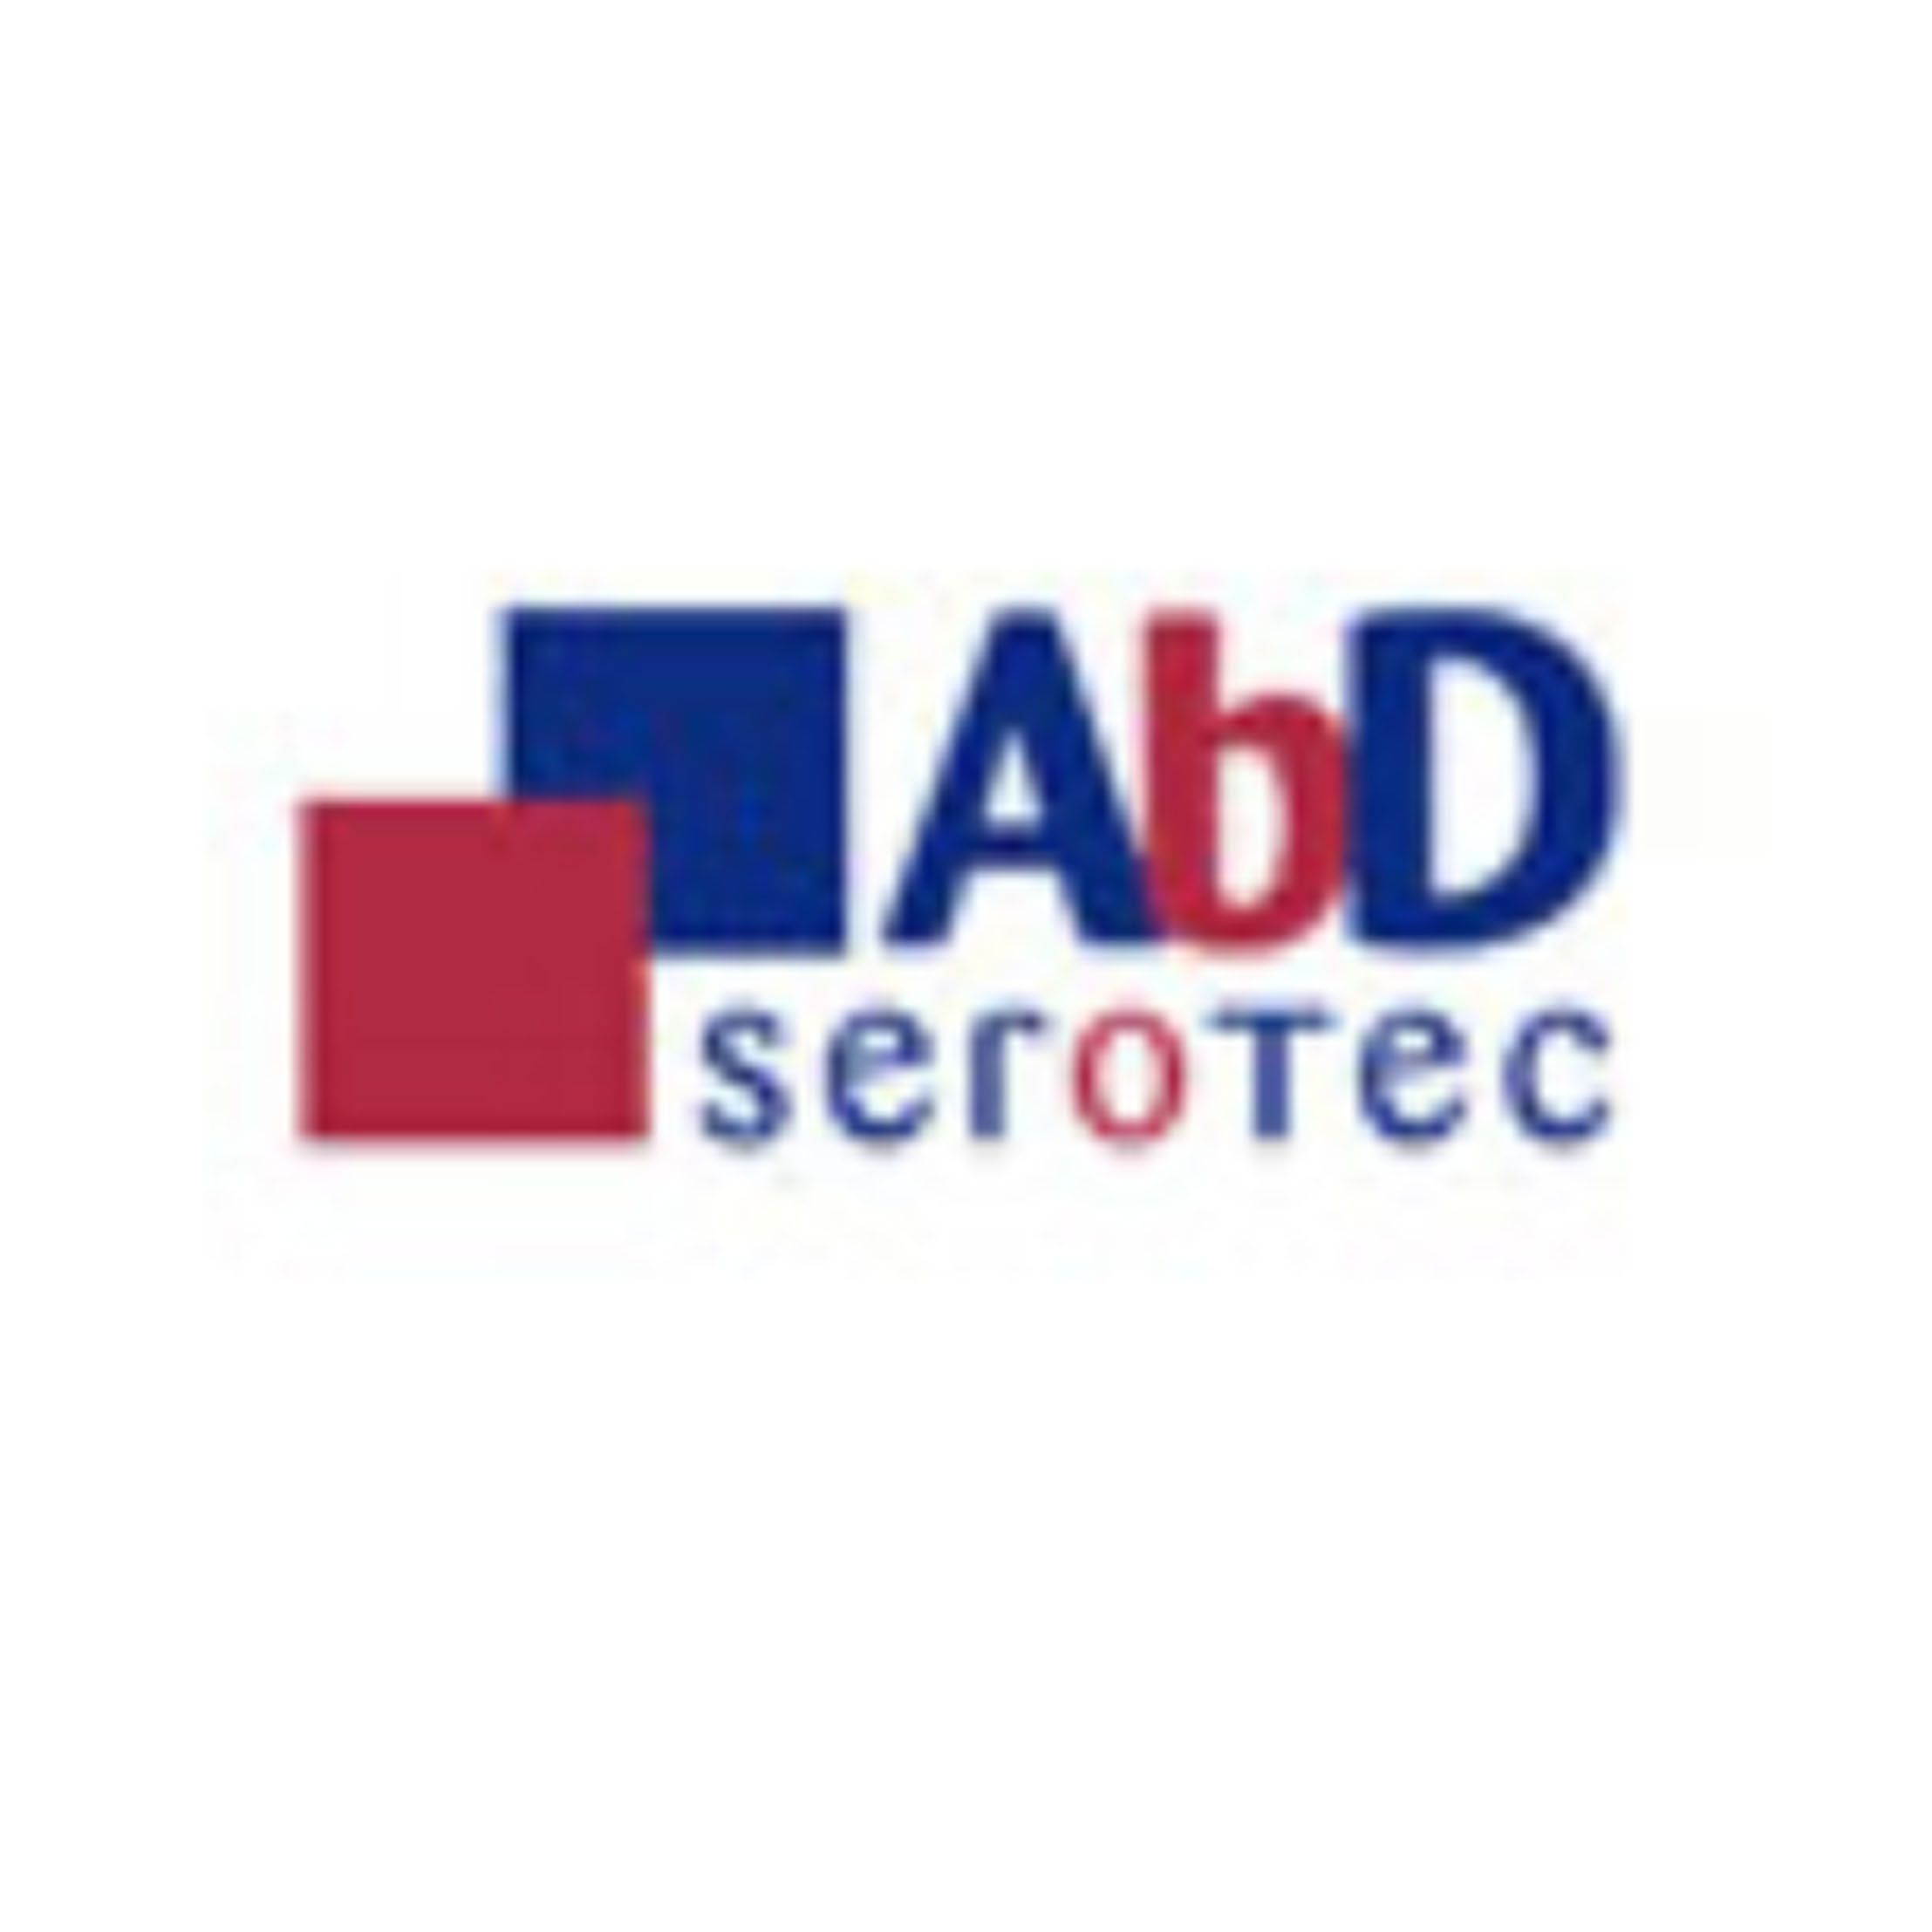 AbD Serotec抗体和免疫学试剂、大鼠CD68单抗